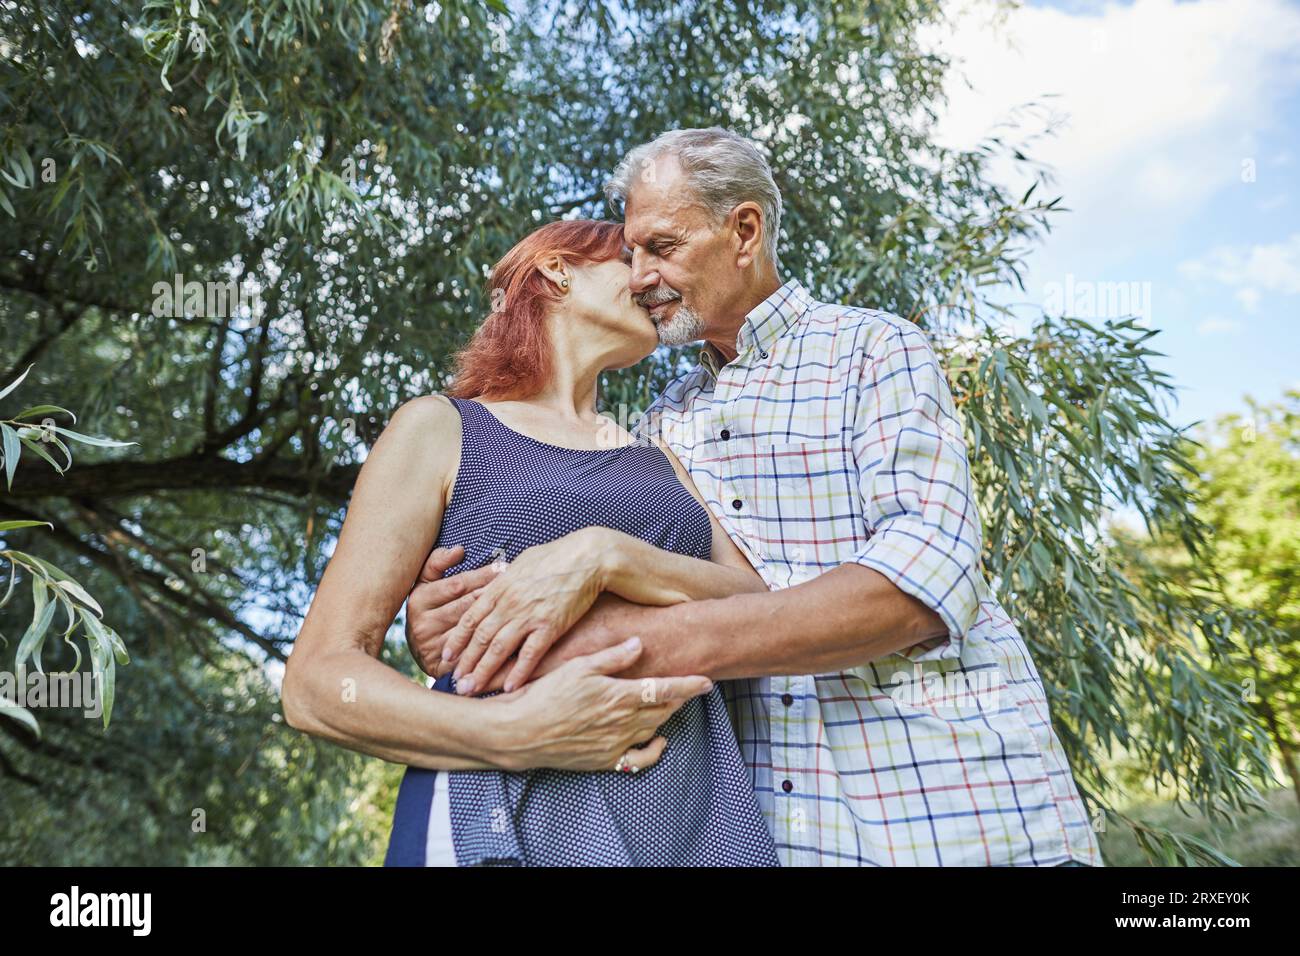 senior man gently hugs and kisses woman Stock Photo